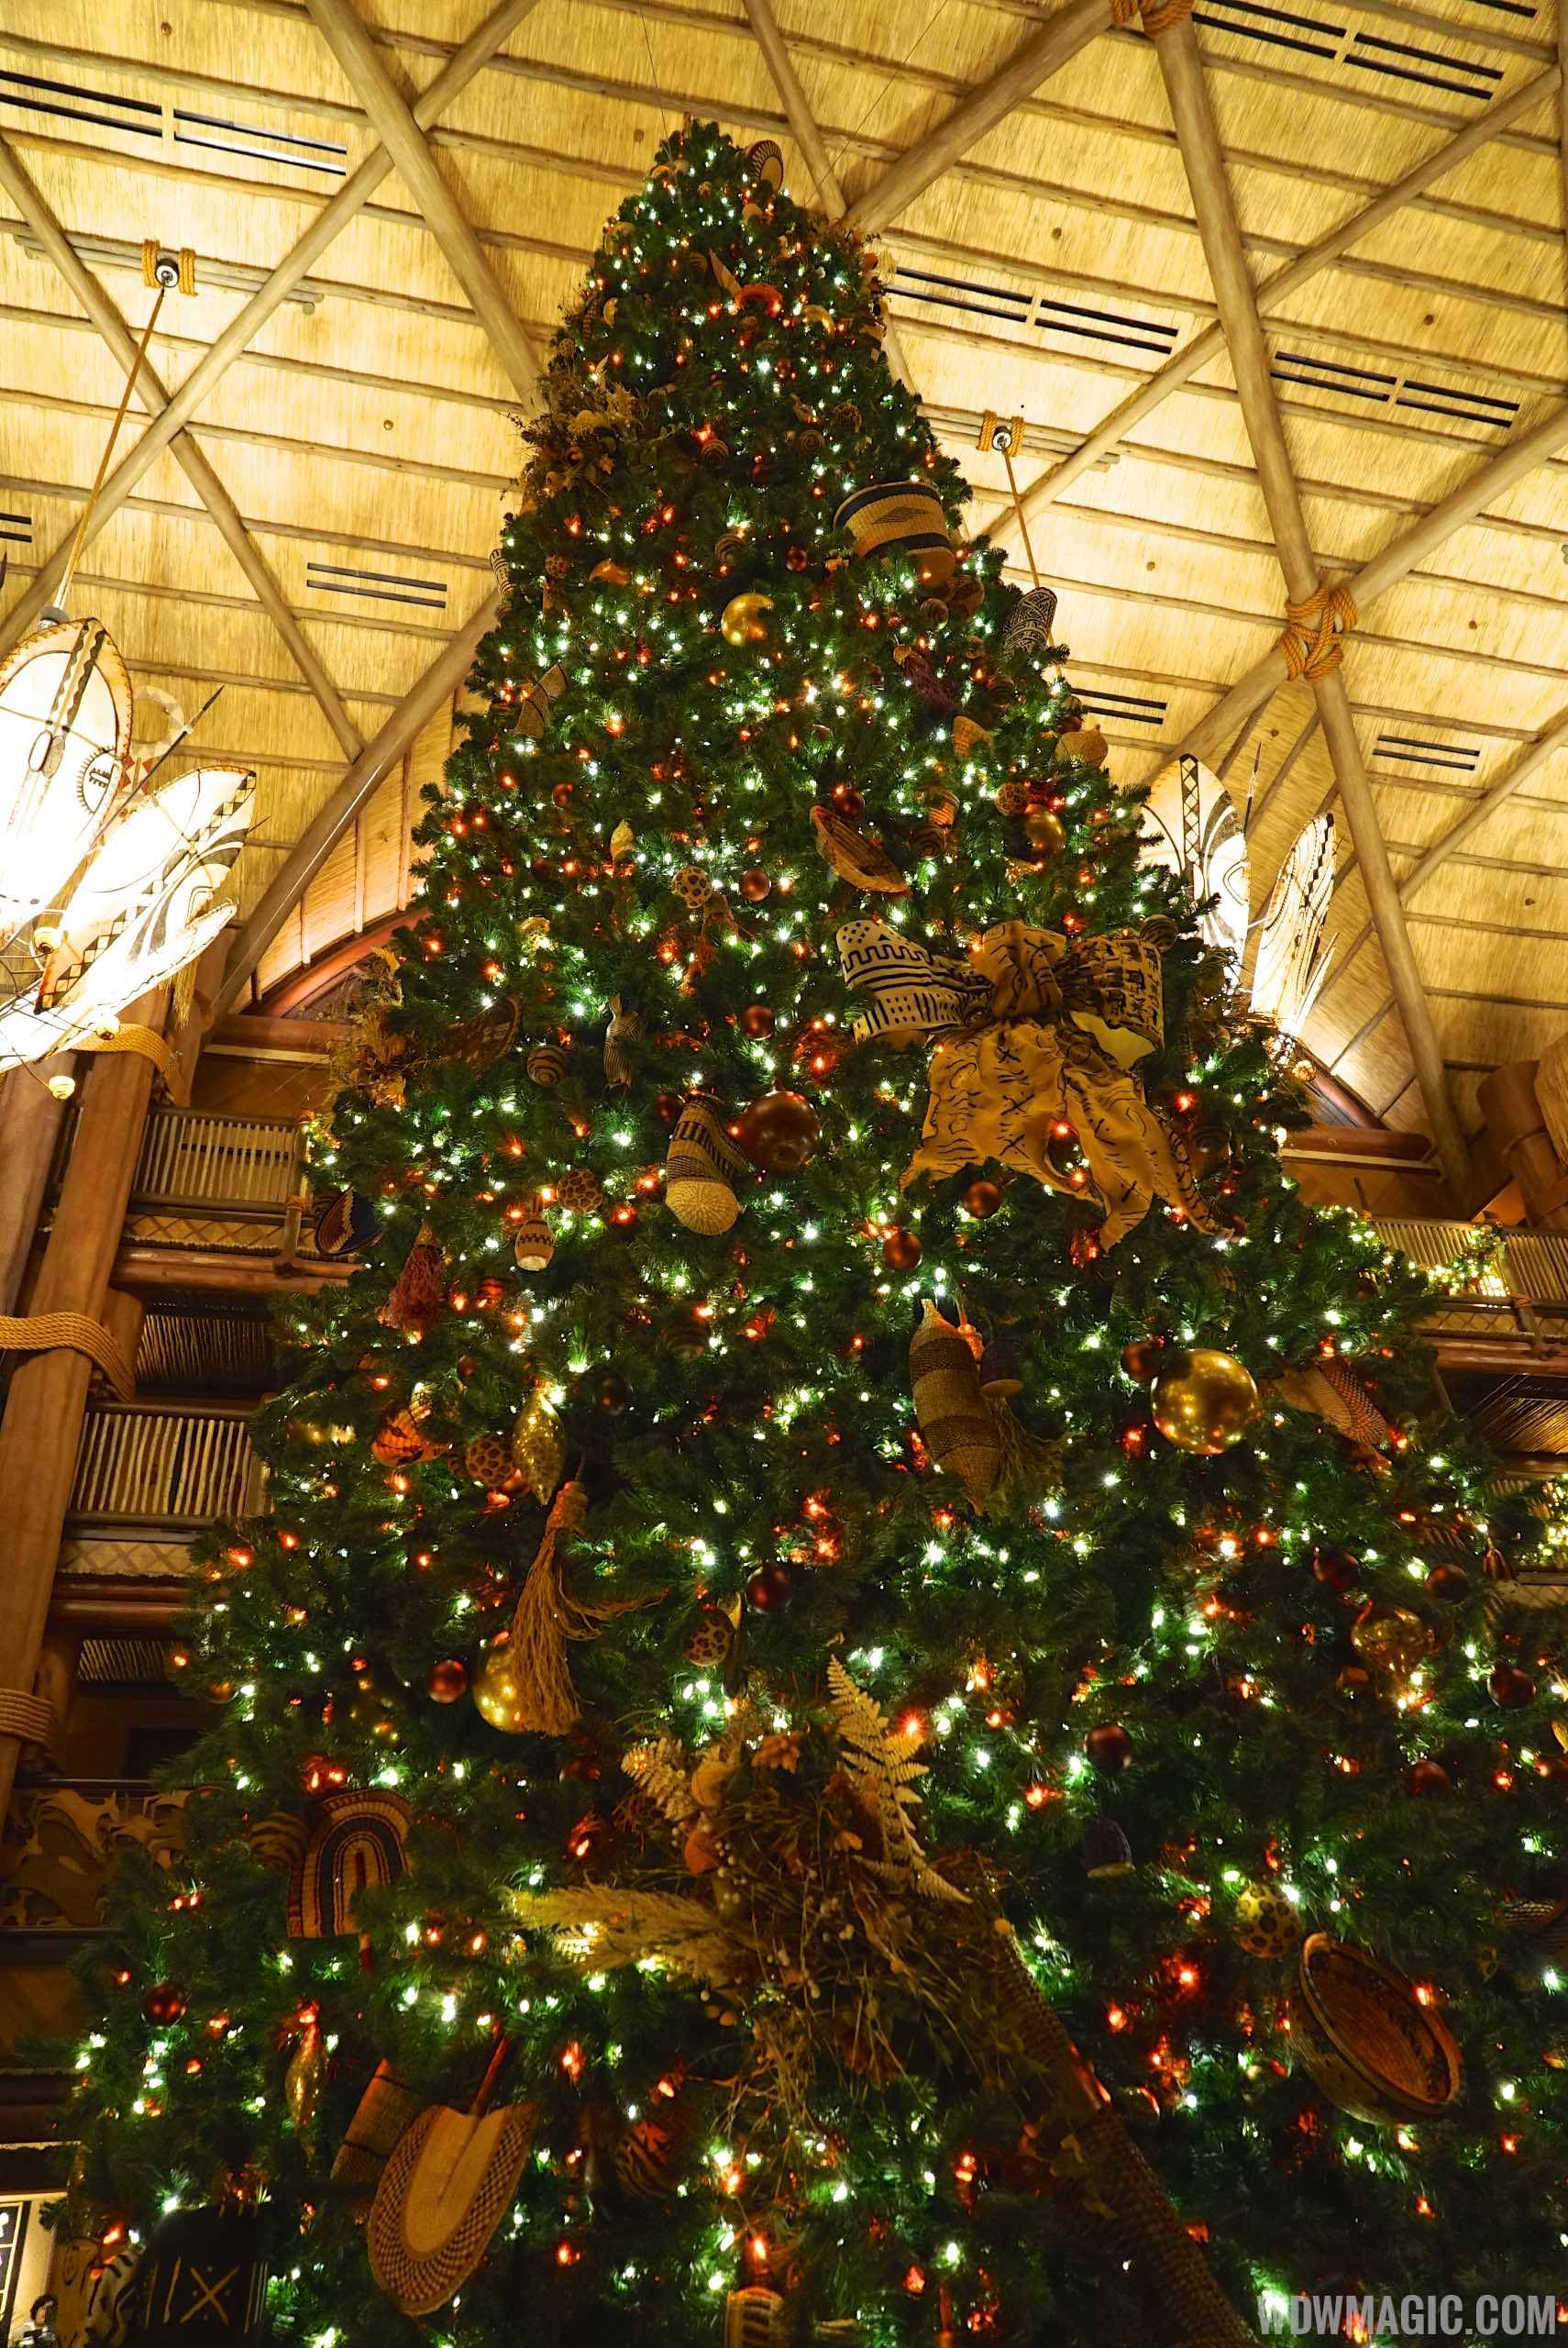 PHOTOS - Holiday decorations at Disney's Animal Kingdom Lodge